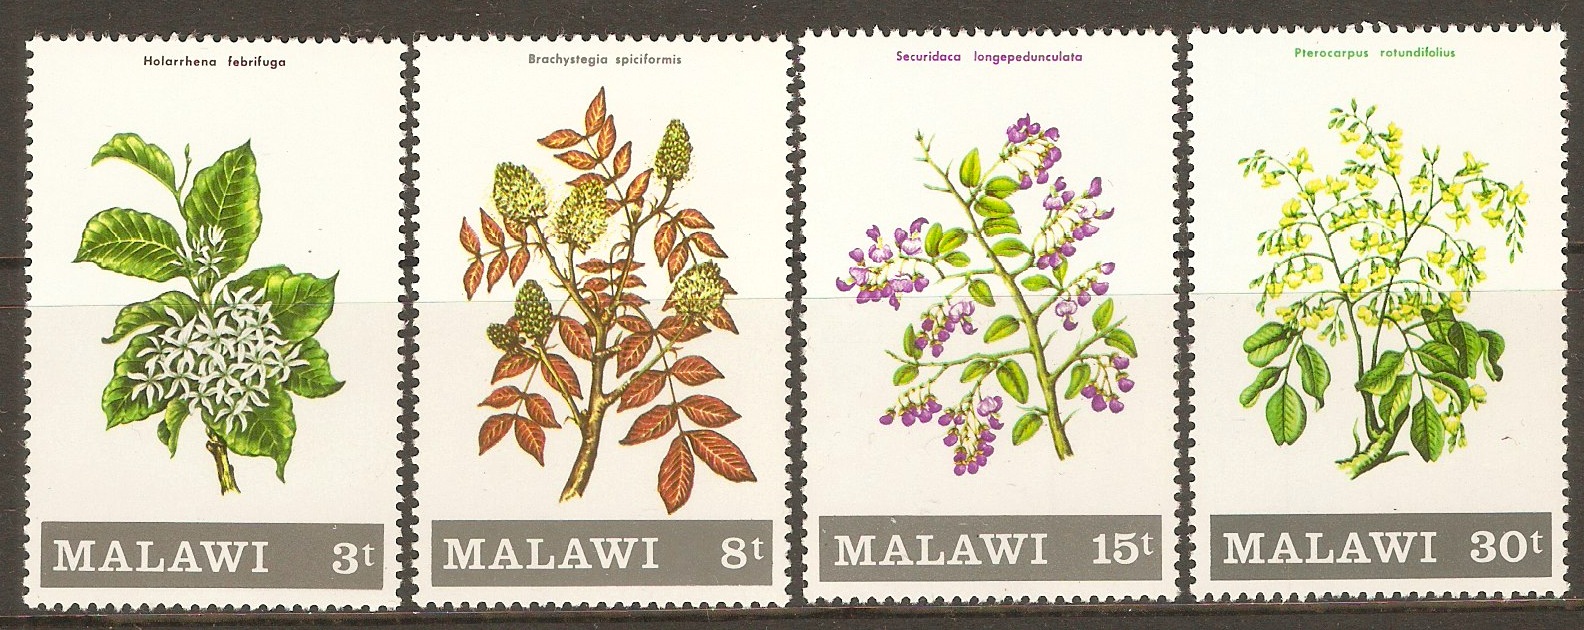 Malawi 1971 Flowering Shrubs and Trees set. SG397-SG400.